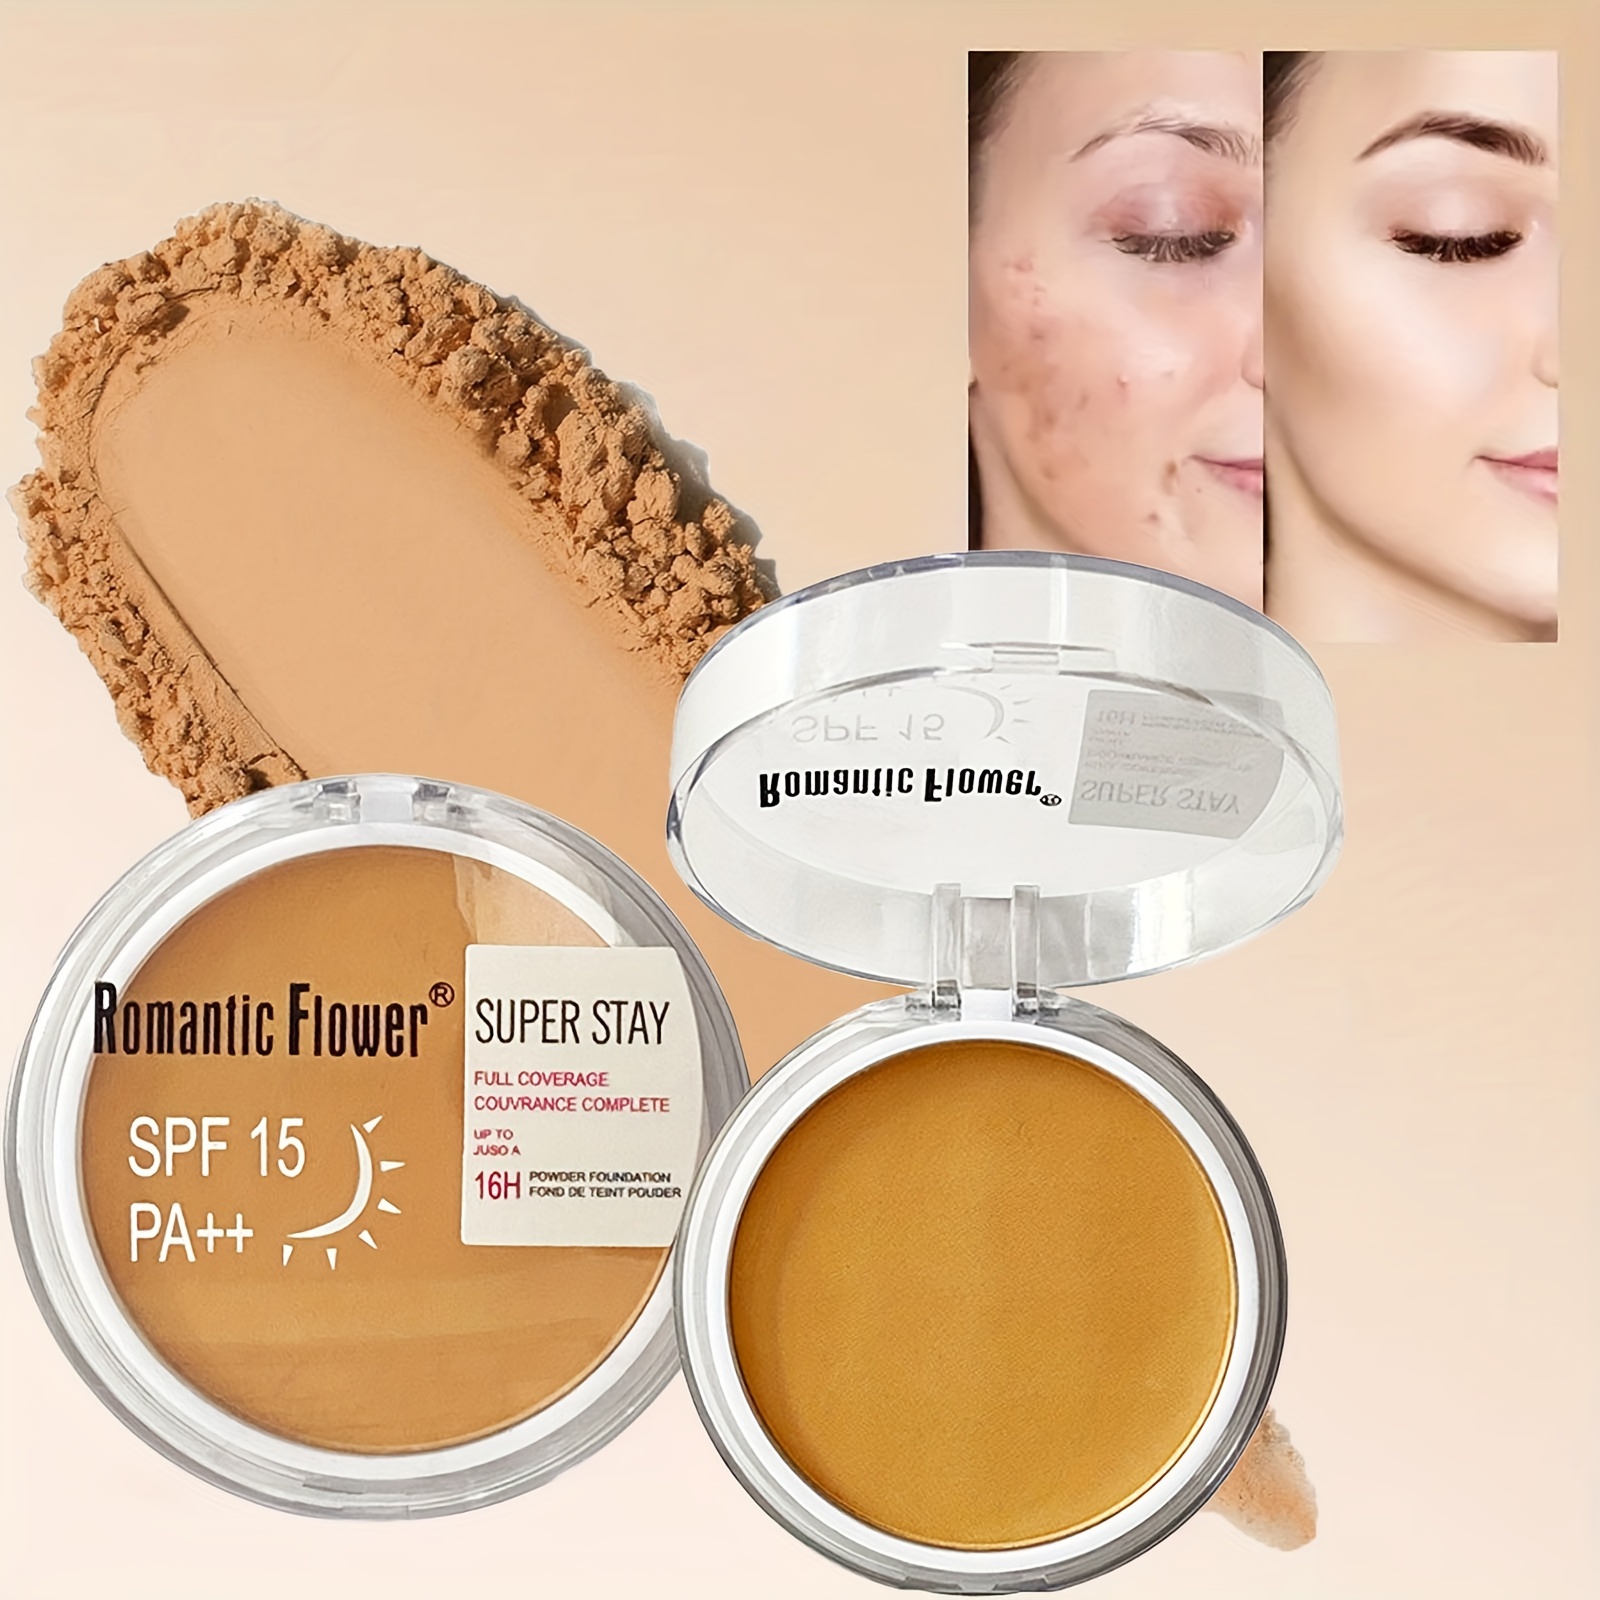 3-color Concealer Face Makeup Pressed Powder, Soft Focus Facial